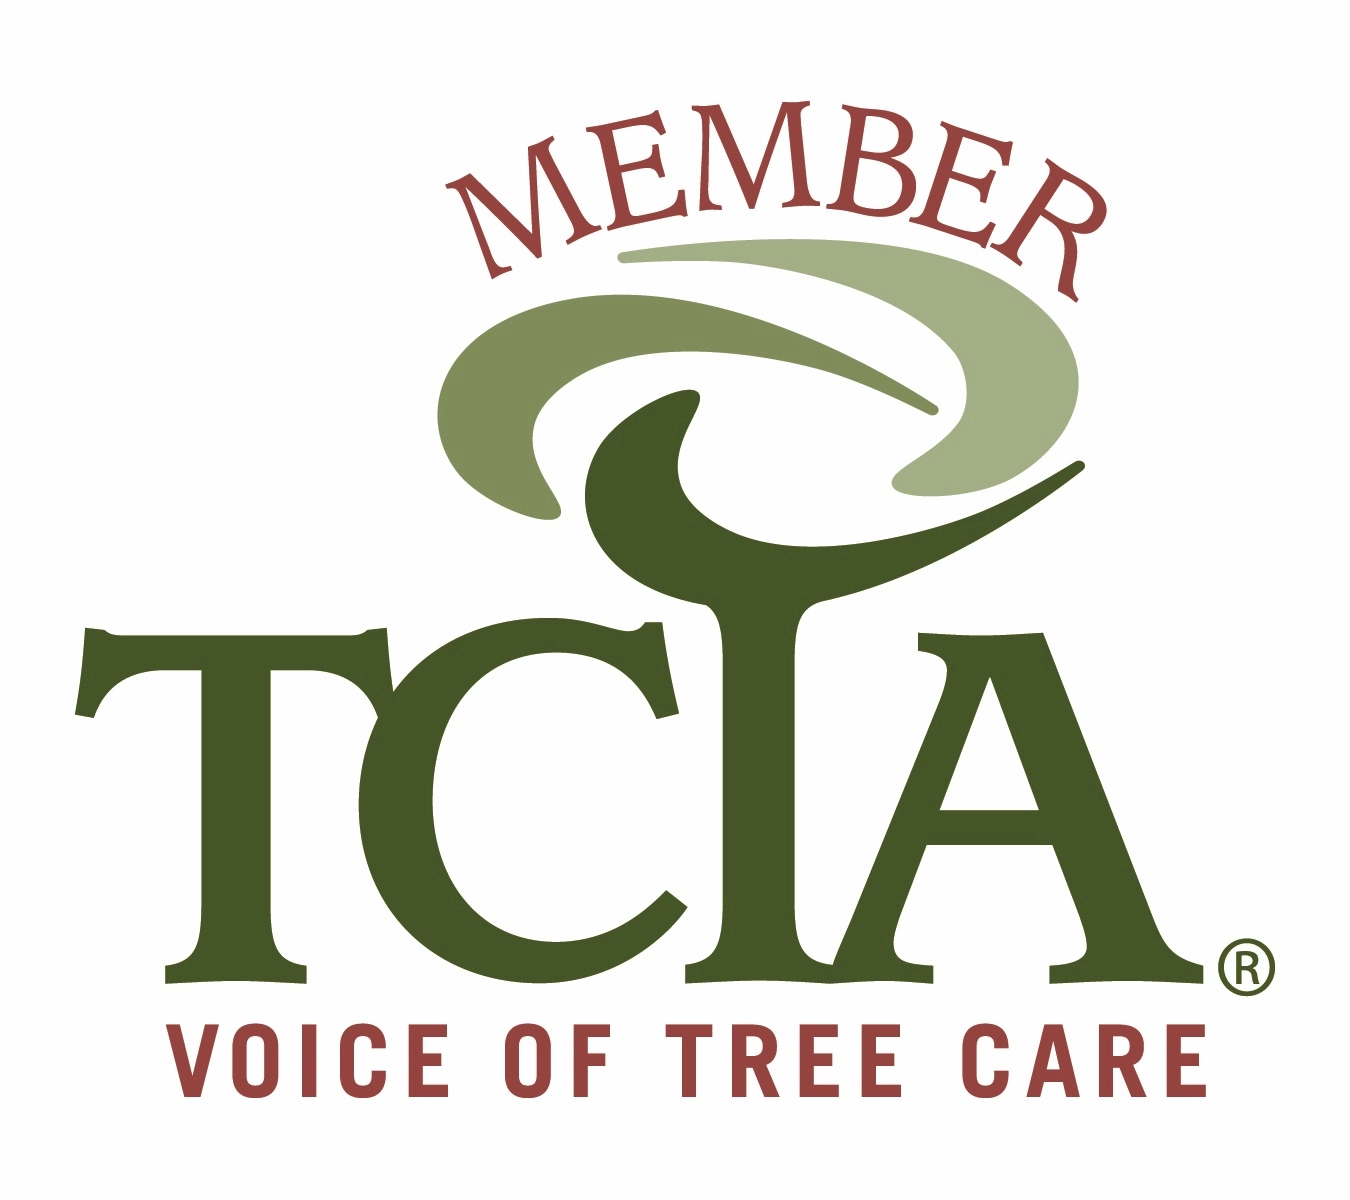 Nassar Tree Care LLC Logo